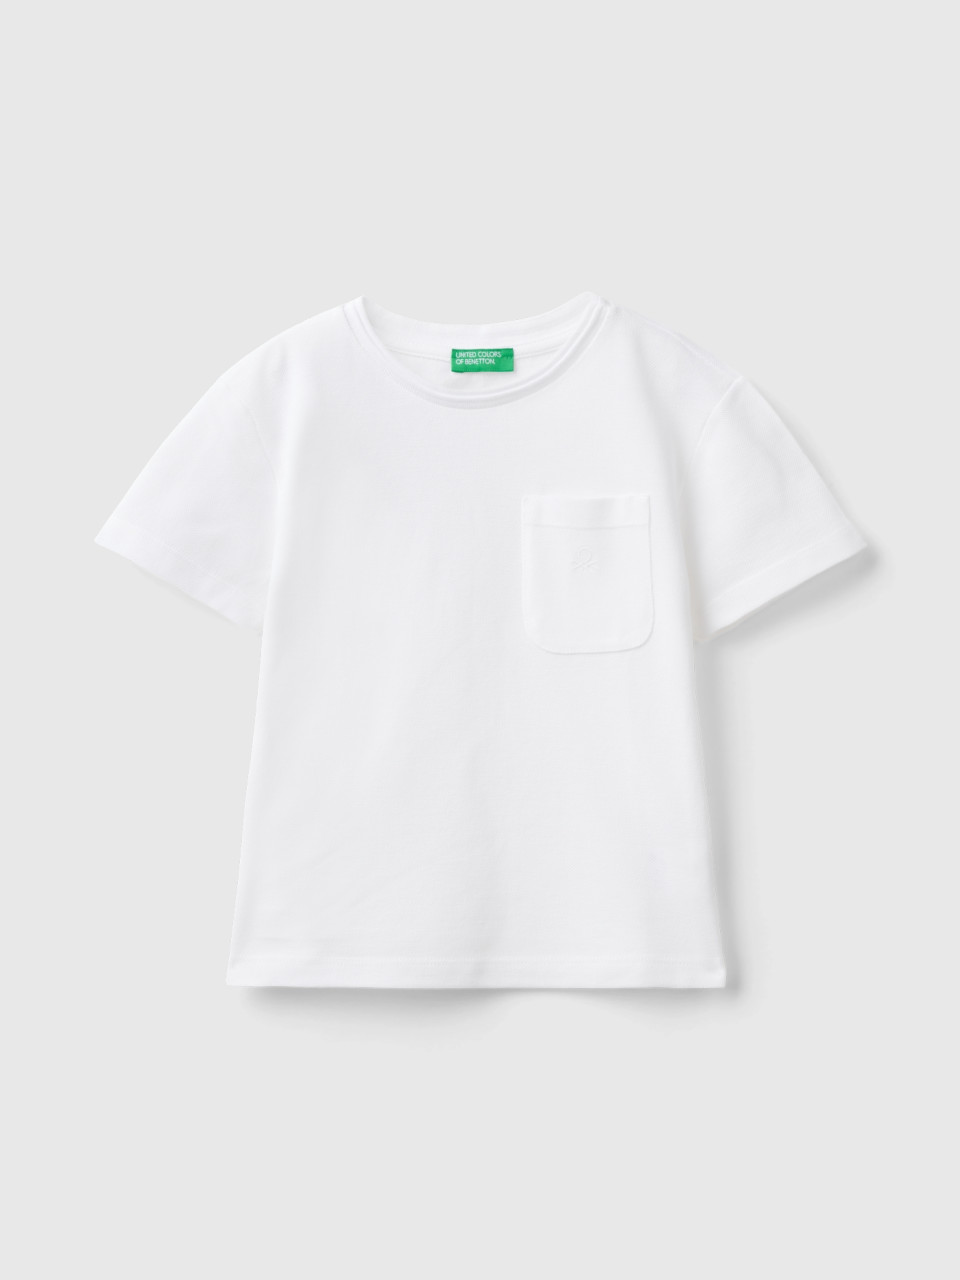 Benetton, Camiseta Con Bolsillo, Blanco, Niños